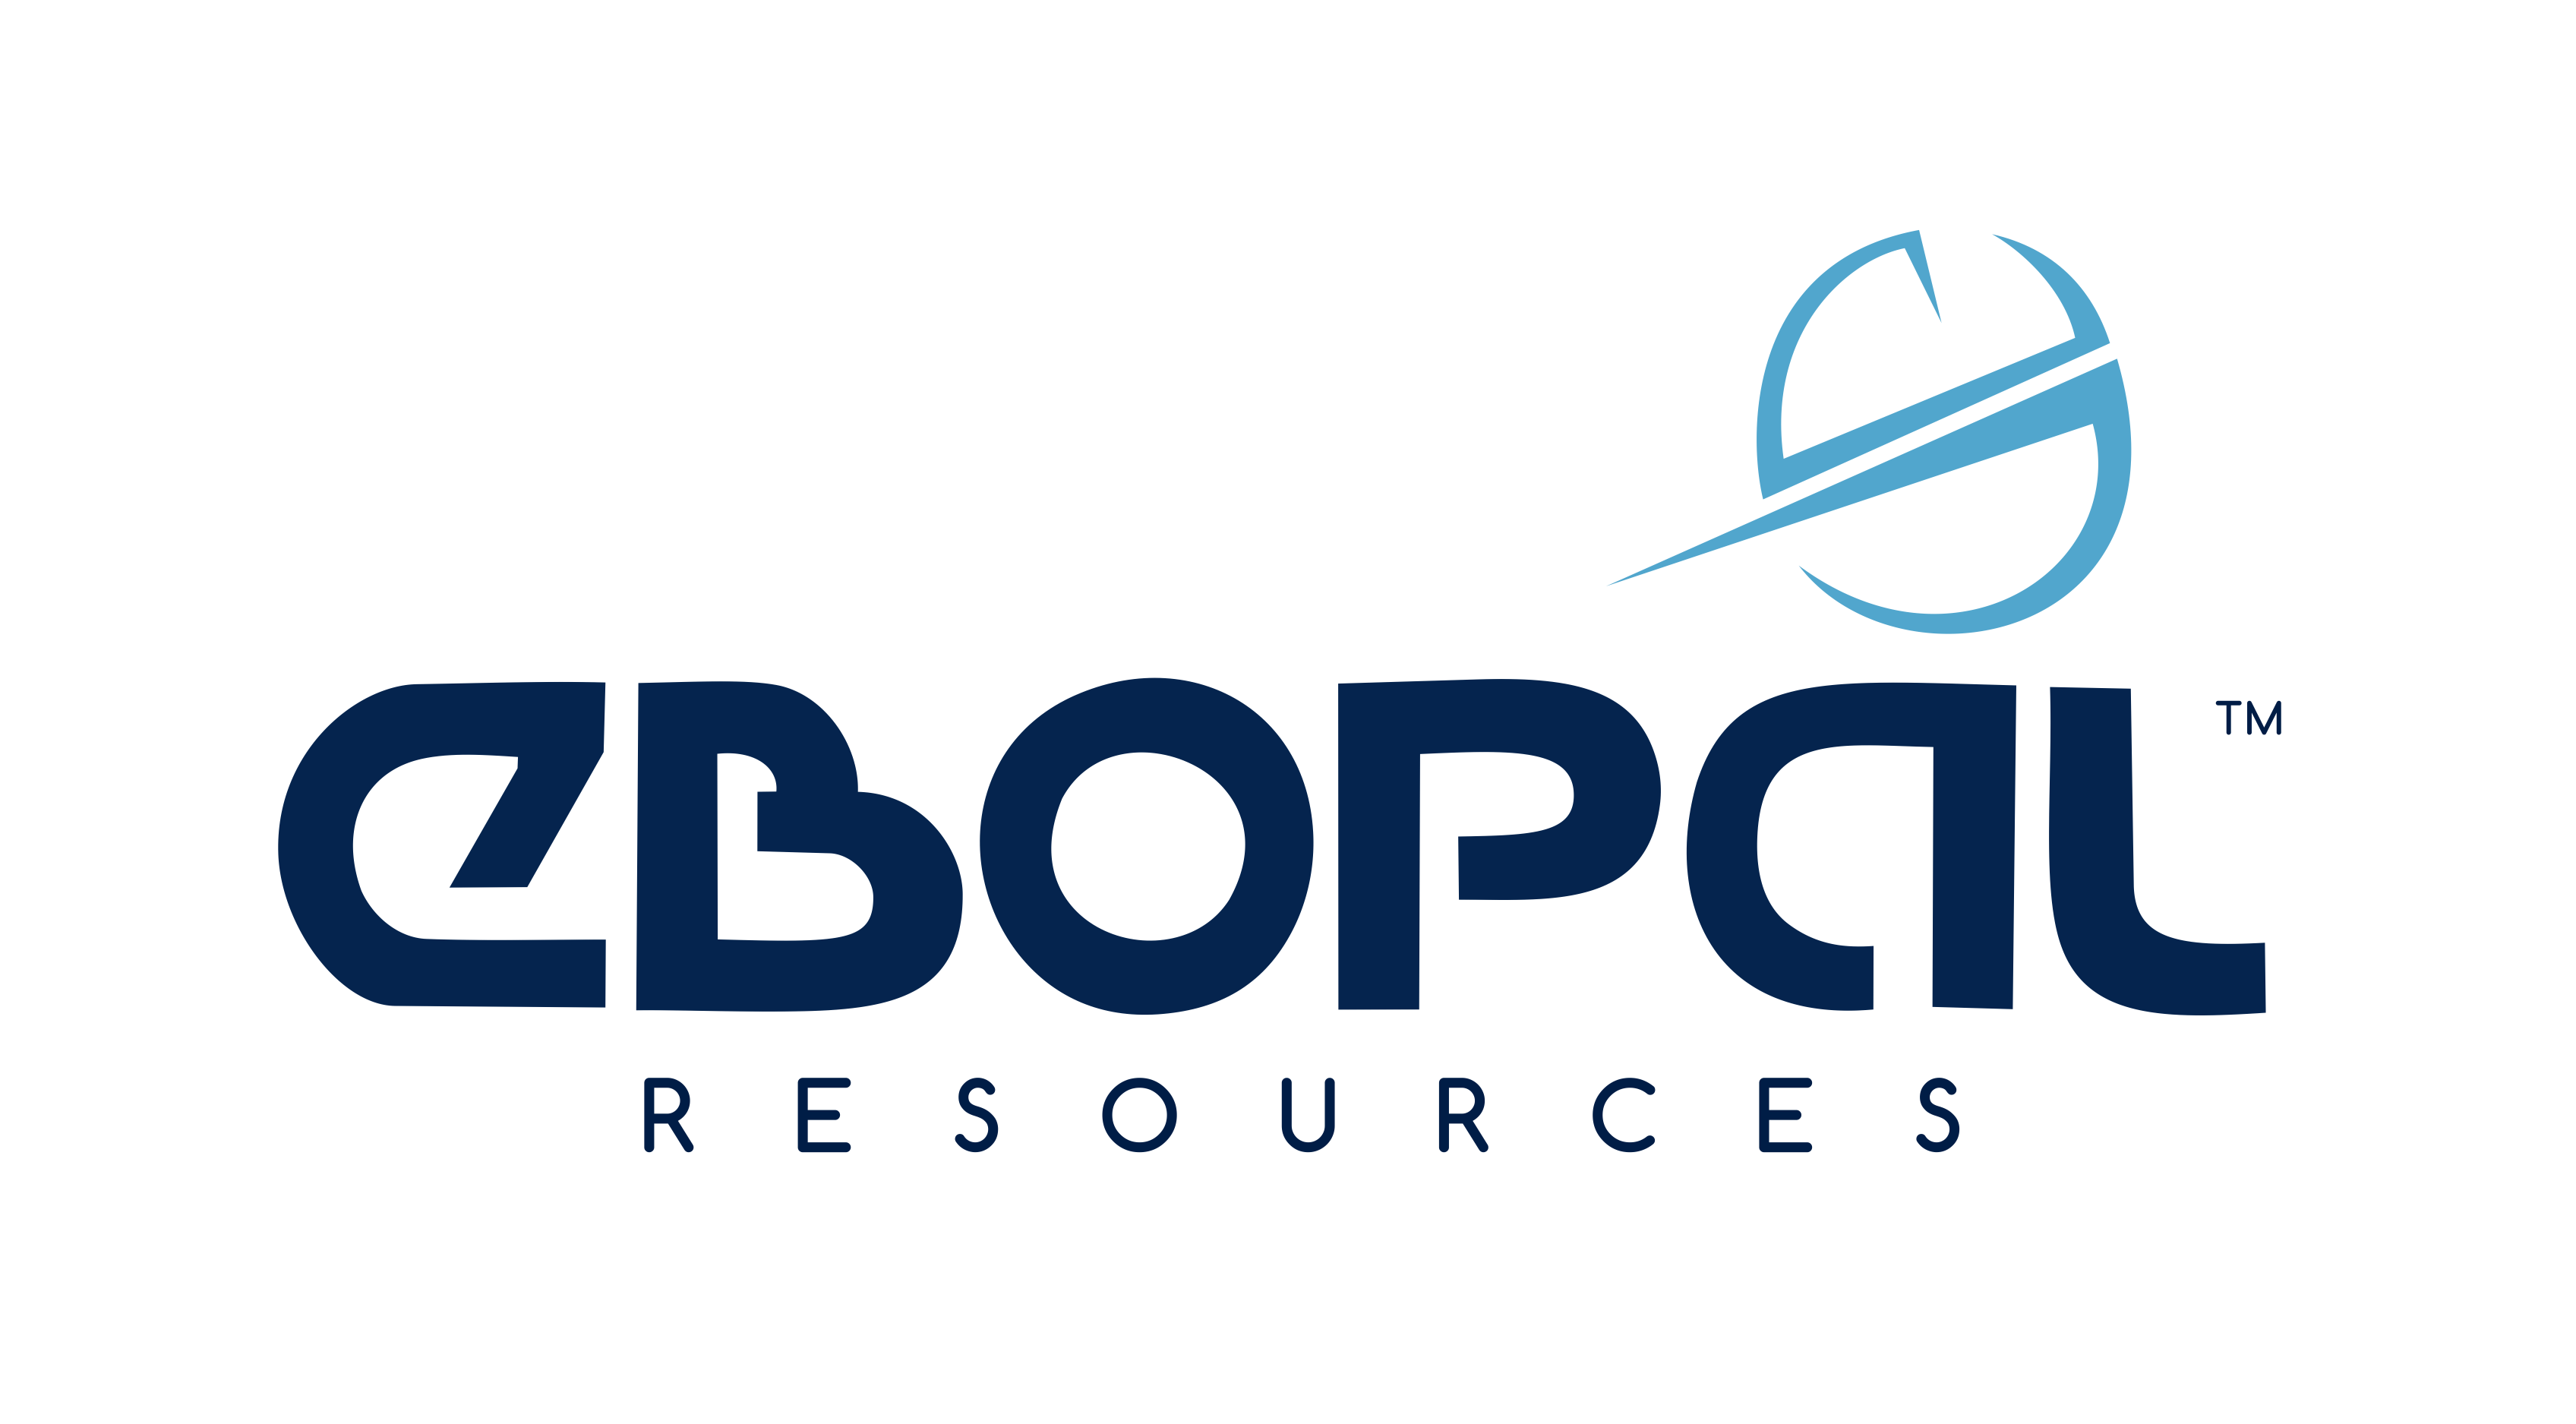 EboPal Resources